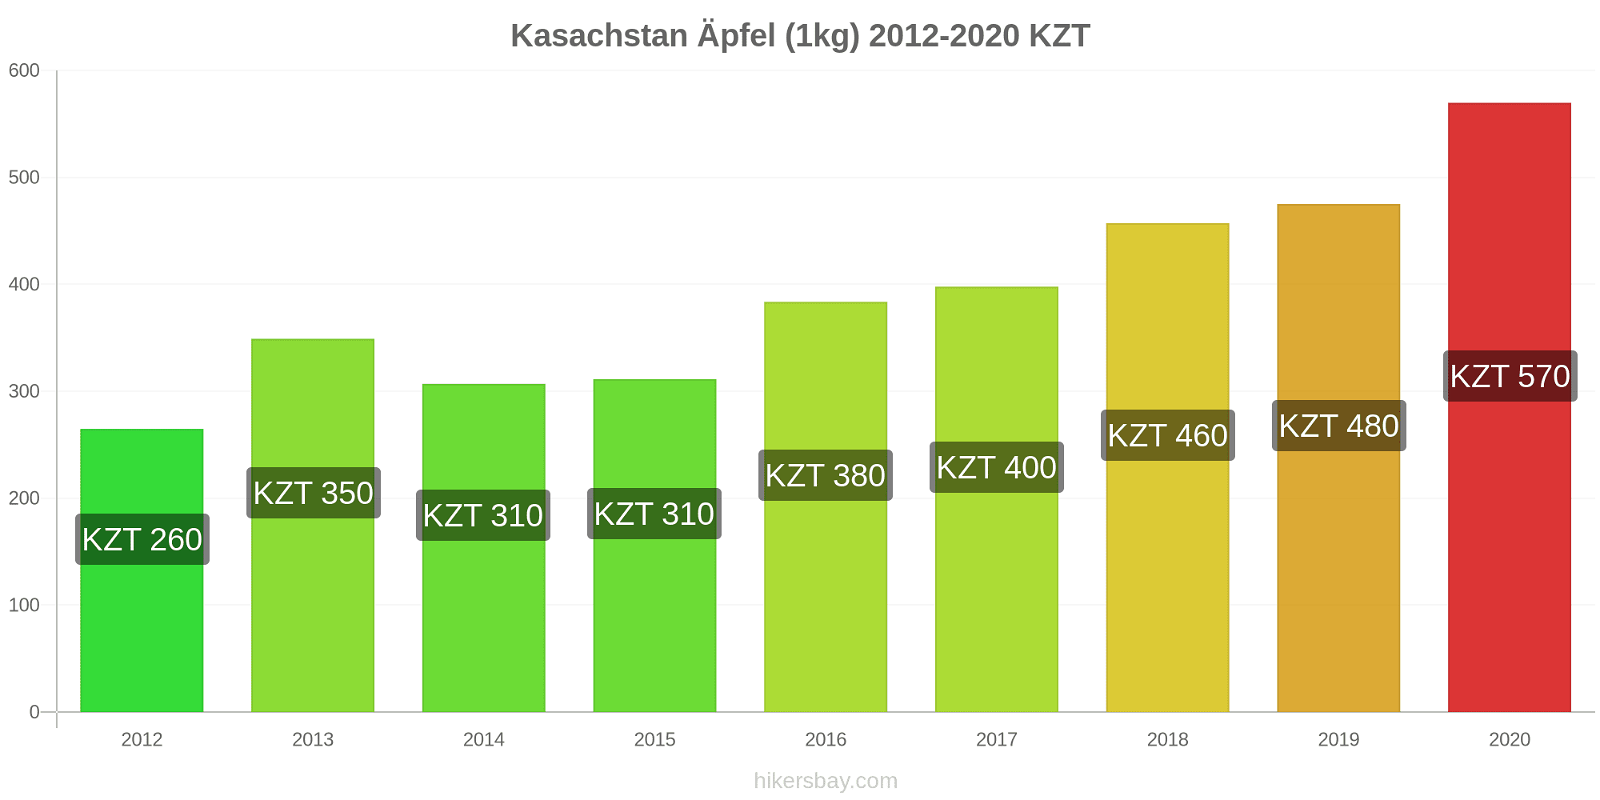 Kasachstan Preisänderungen Äpfel (1kg) hikersbay.com